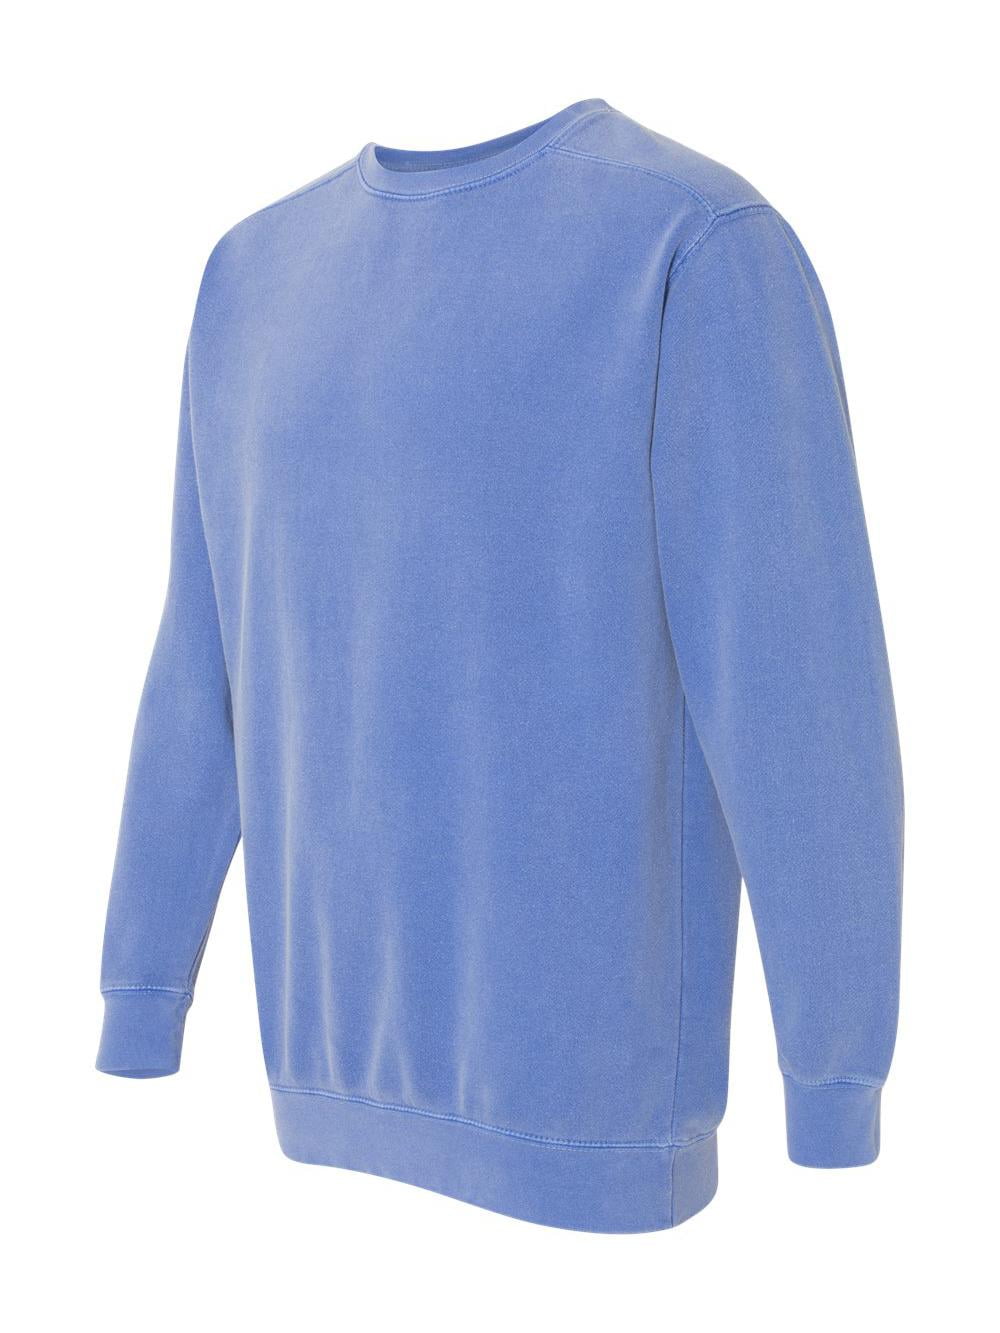 COMFORT COLORS - Comfort Colors - Garment-Dyed Sweatshirt - 1566 ...